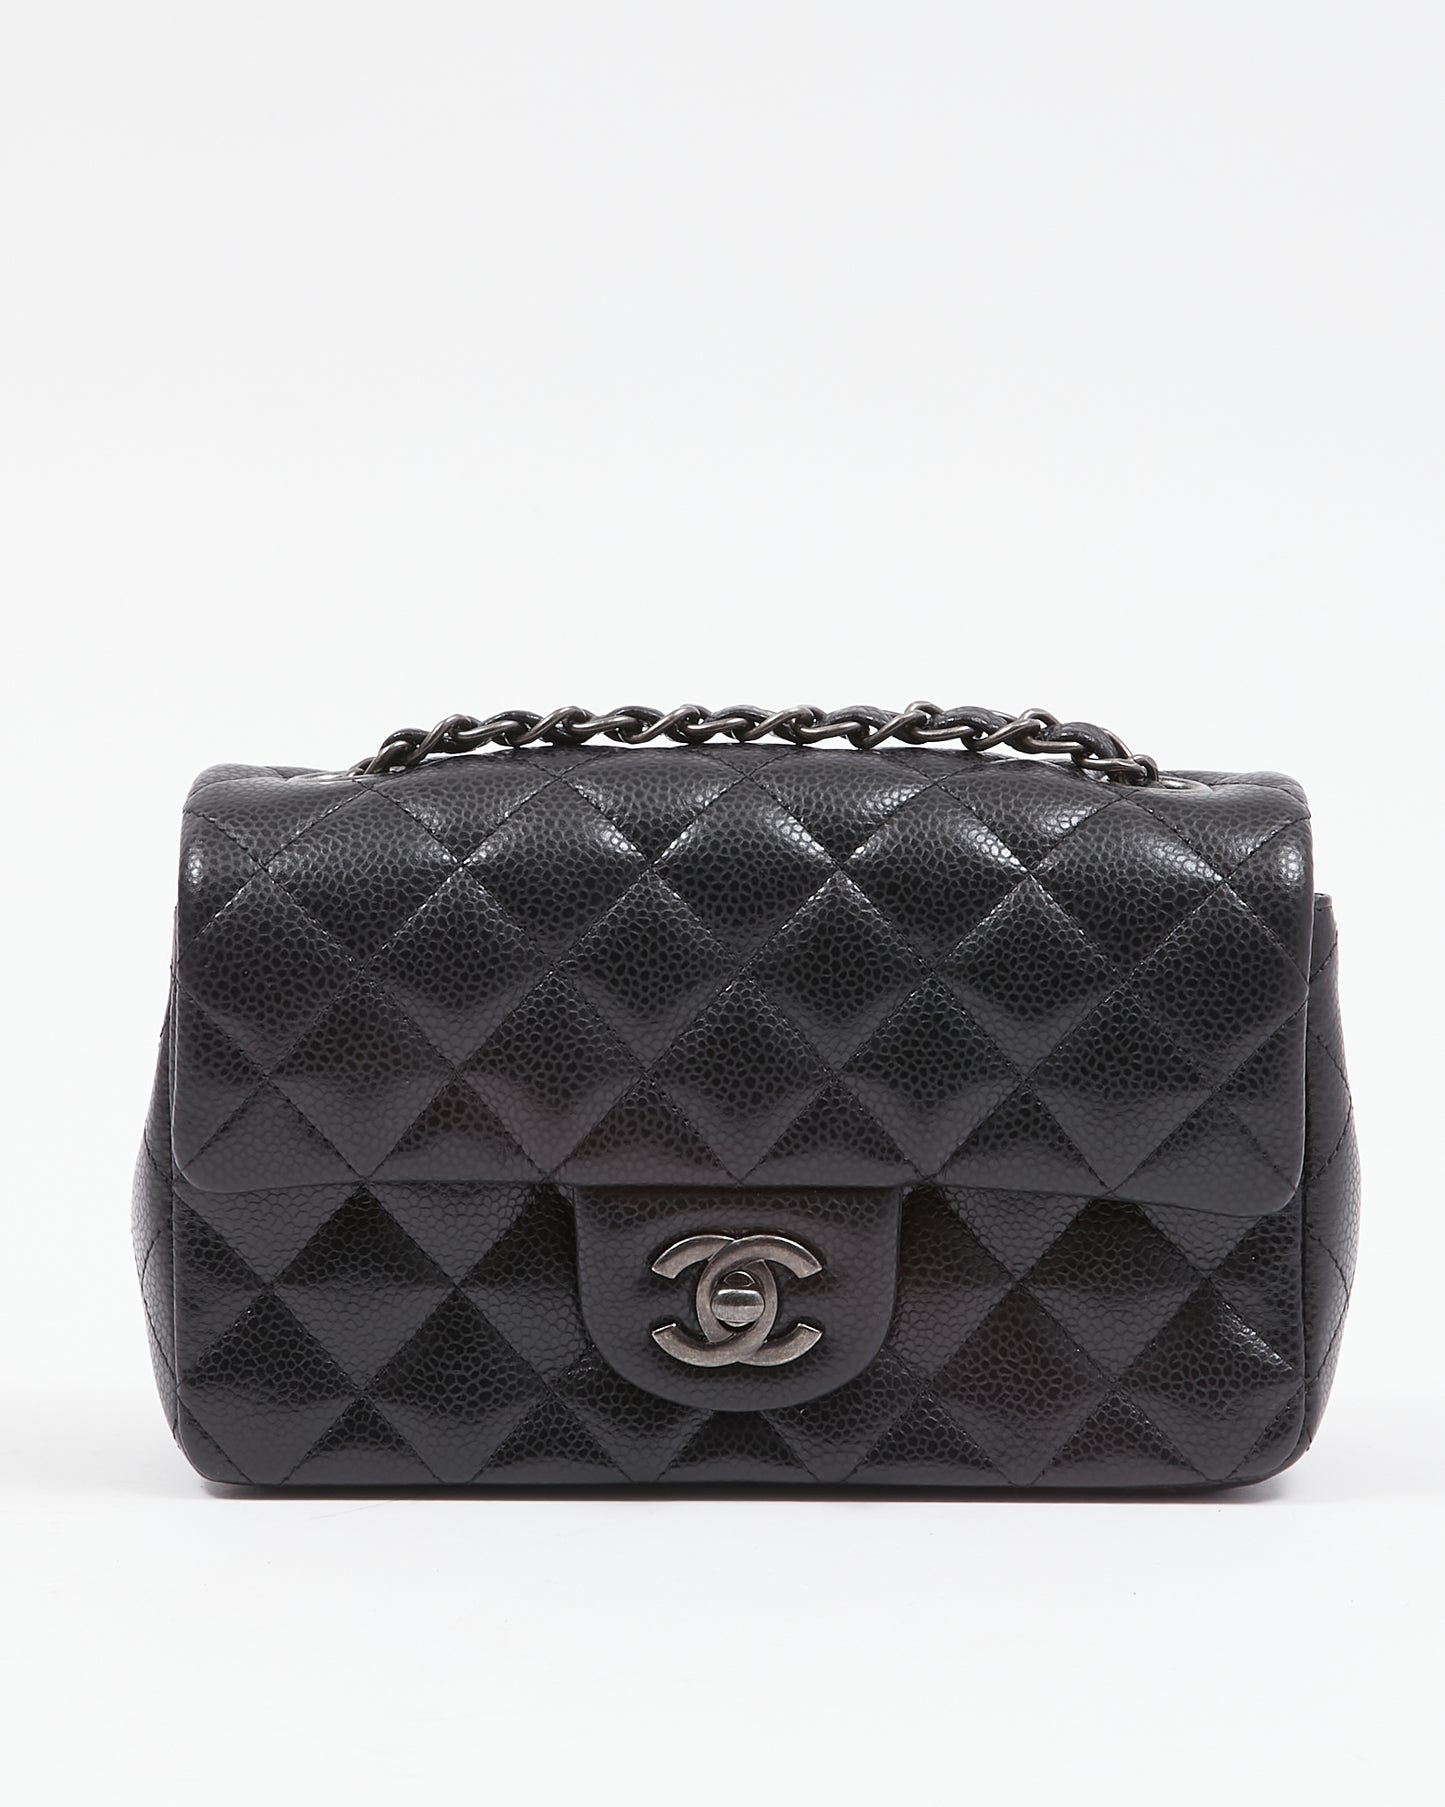 Chanel Black Caviar Mini Rectangular Flap Bag